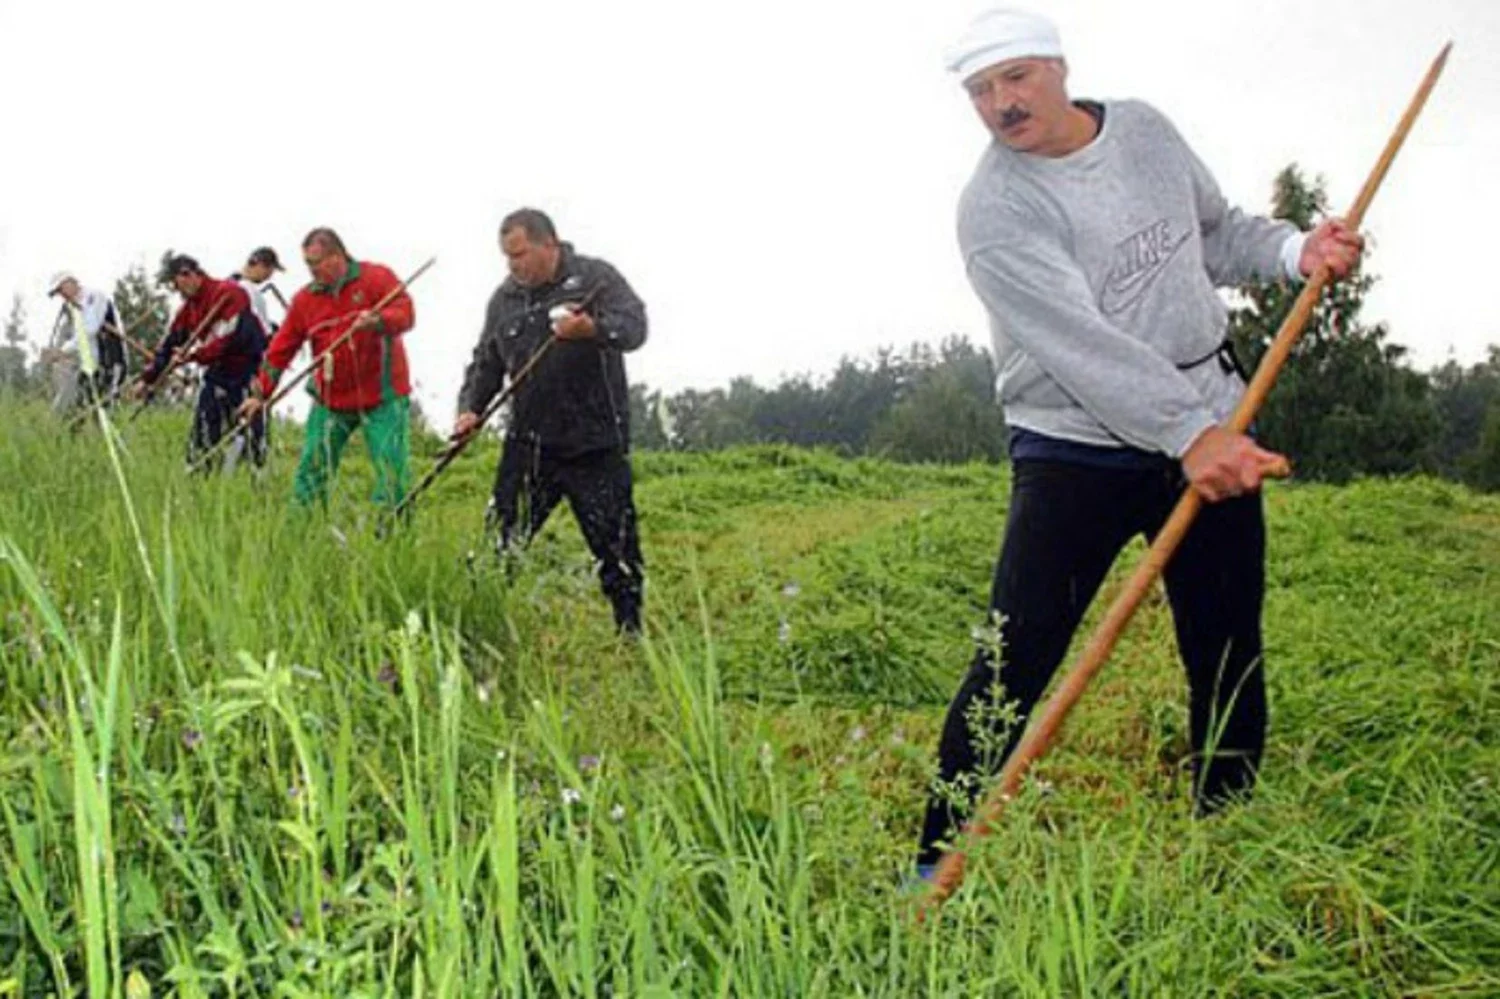 Косарь фото. Лукашенко косит. Лукашенко косит траву. Коса косить траву. Косарь косит траву.